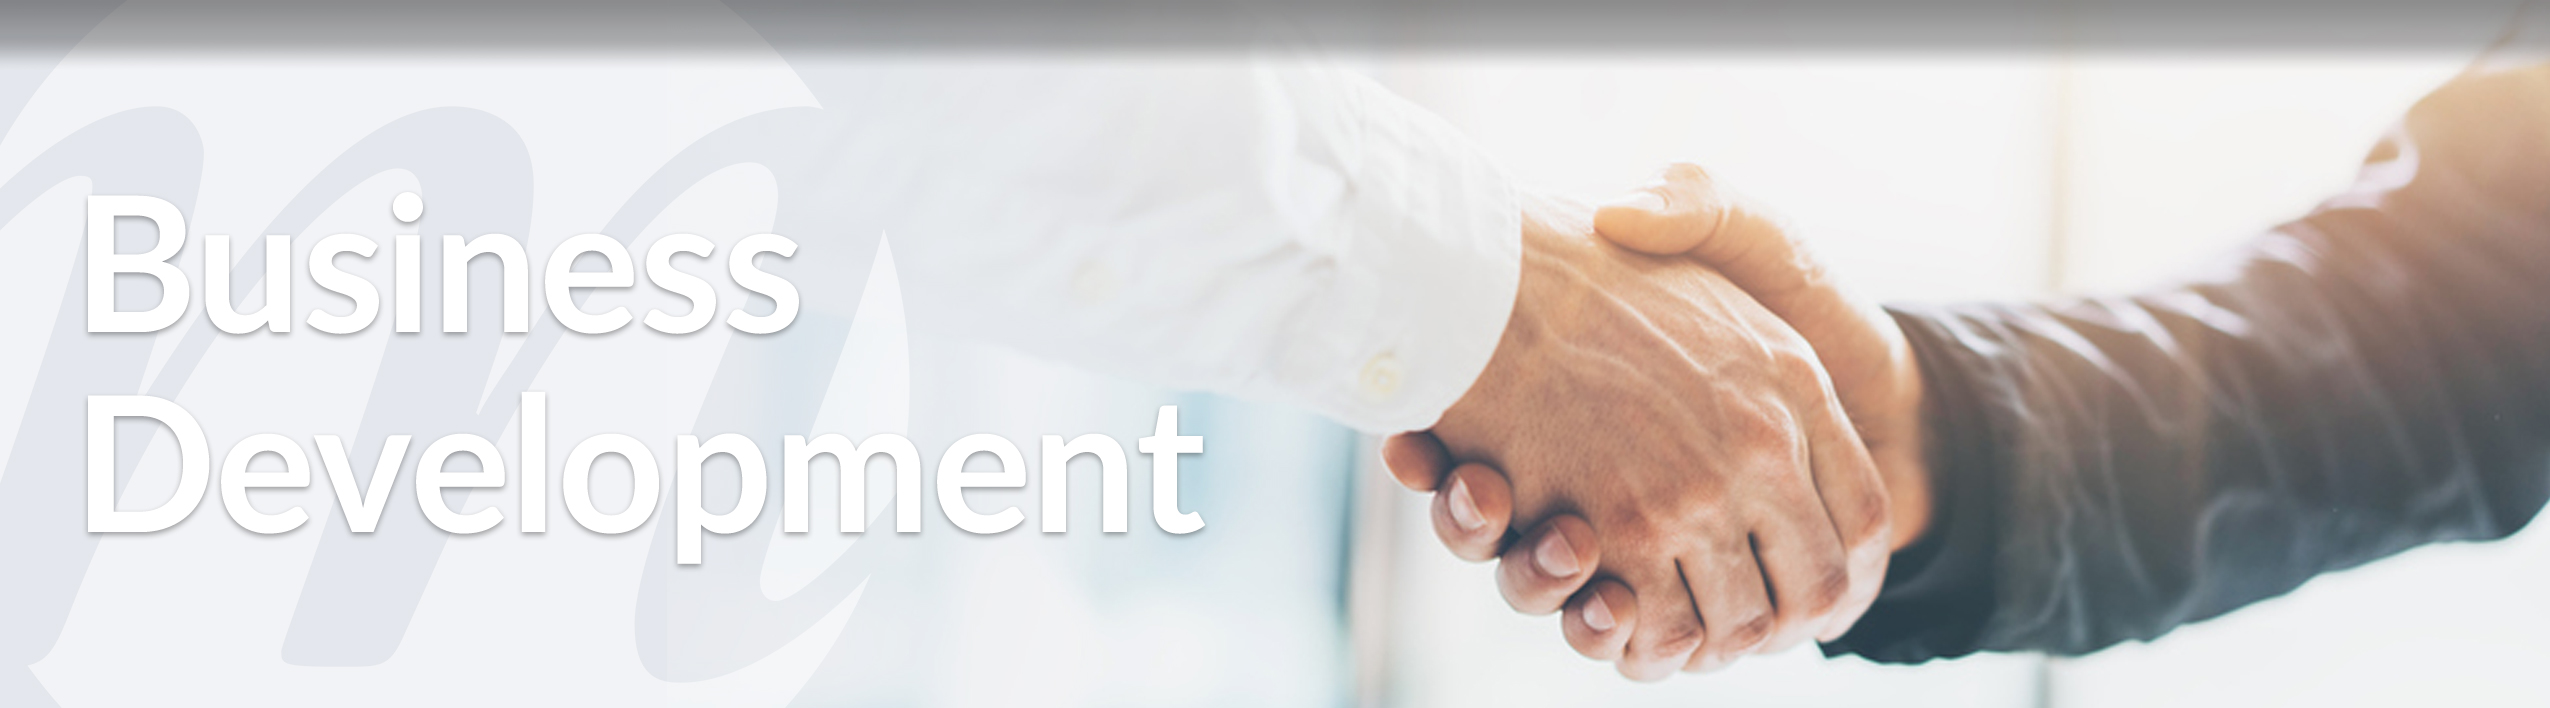 Business Development Banner with handshake